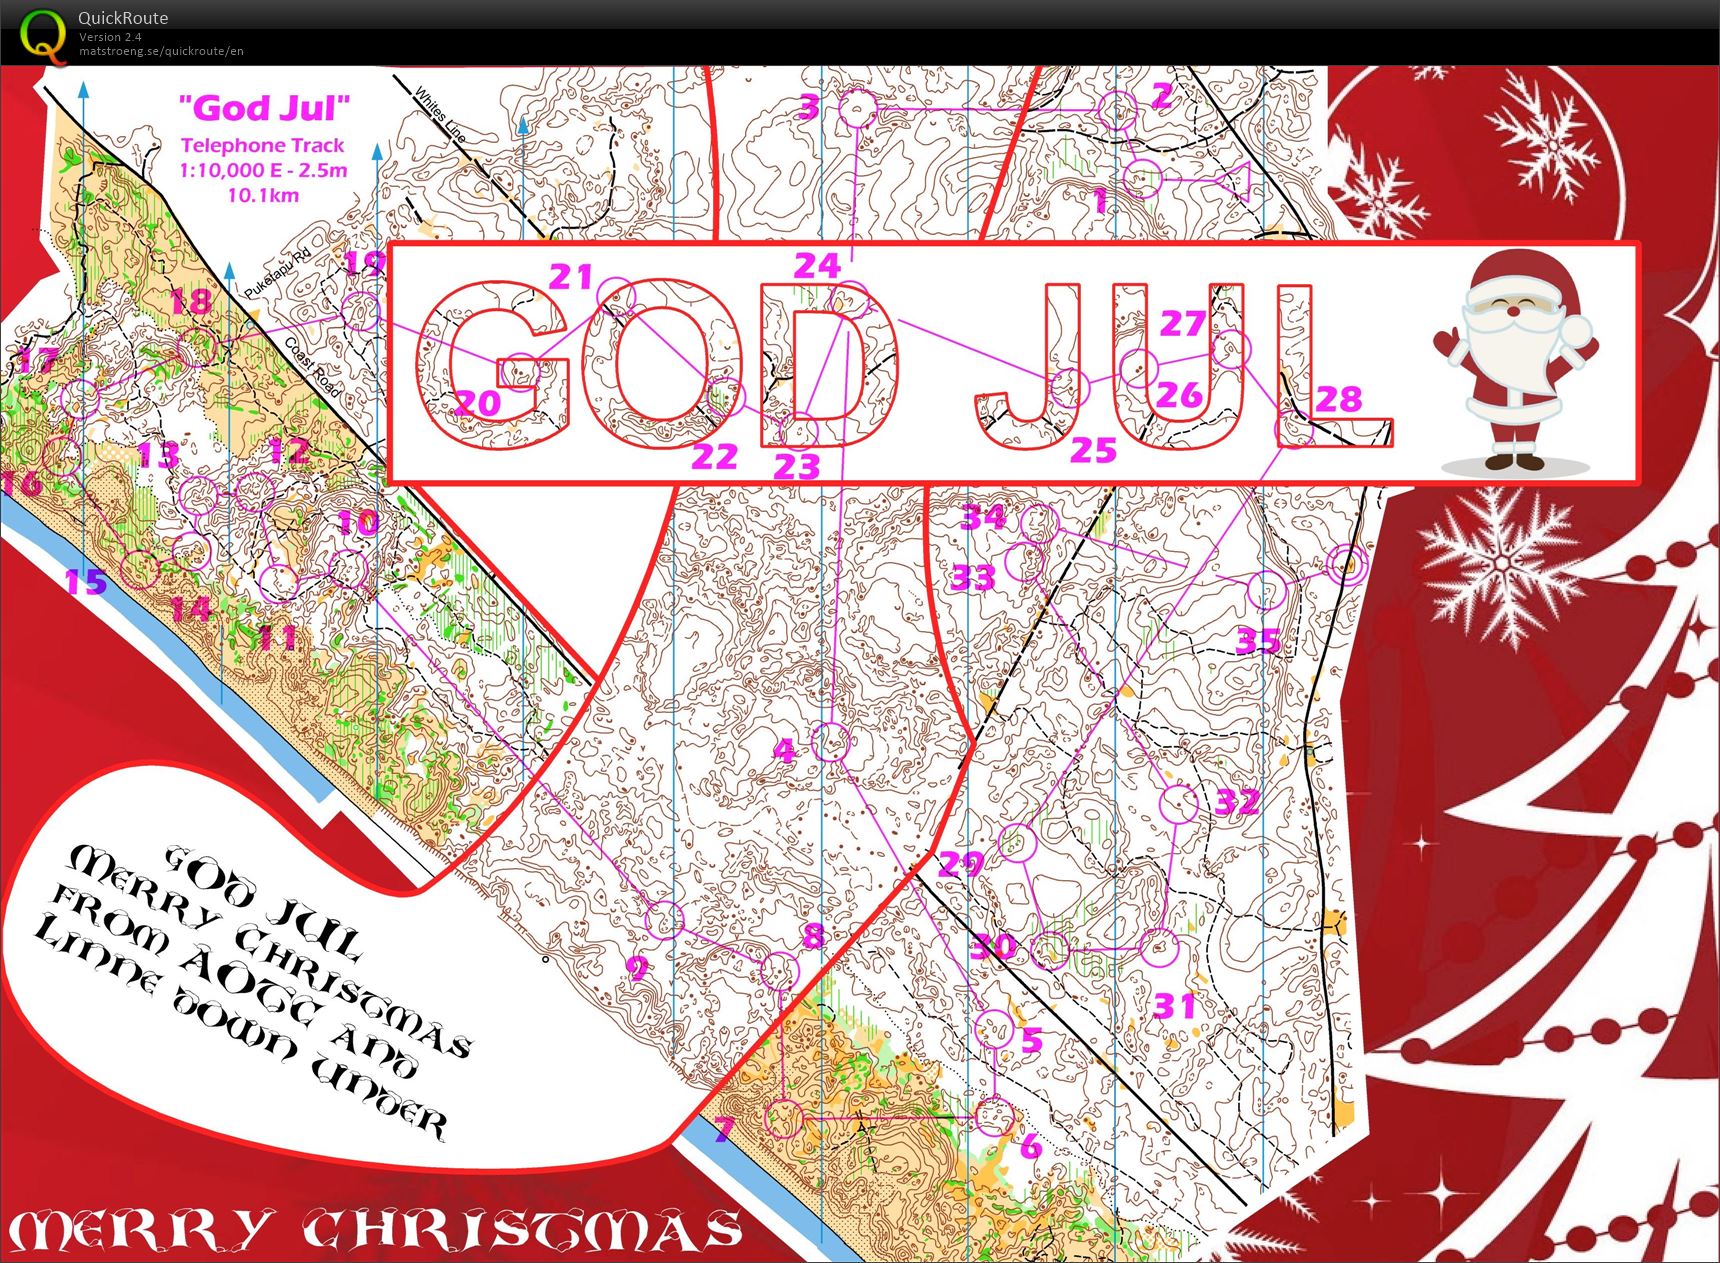 God Jul - Christmas Eve Training (2014-12-24)